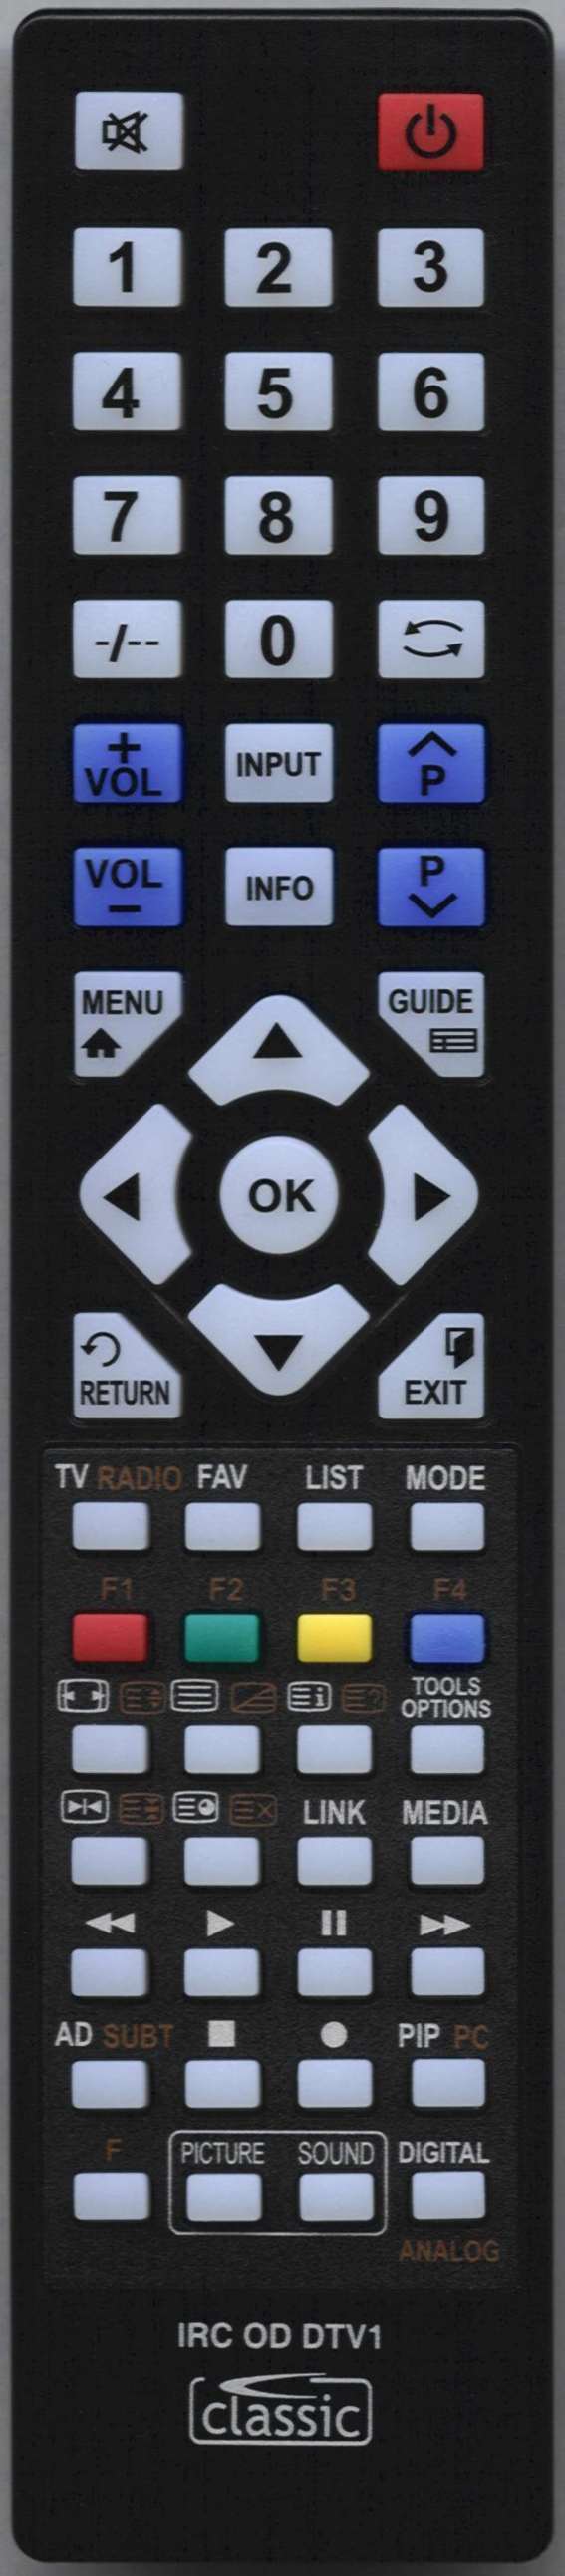 UMC X22/16A-GB-TCD-UK Remote Control